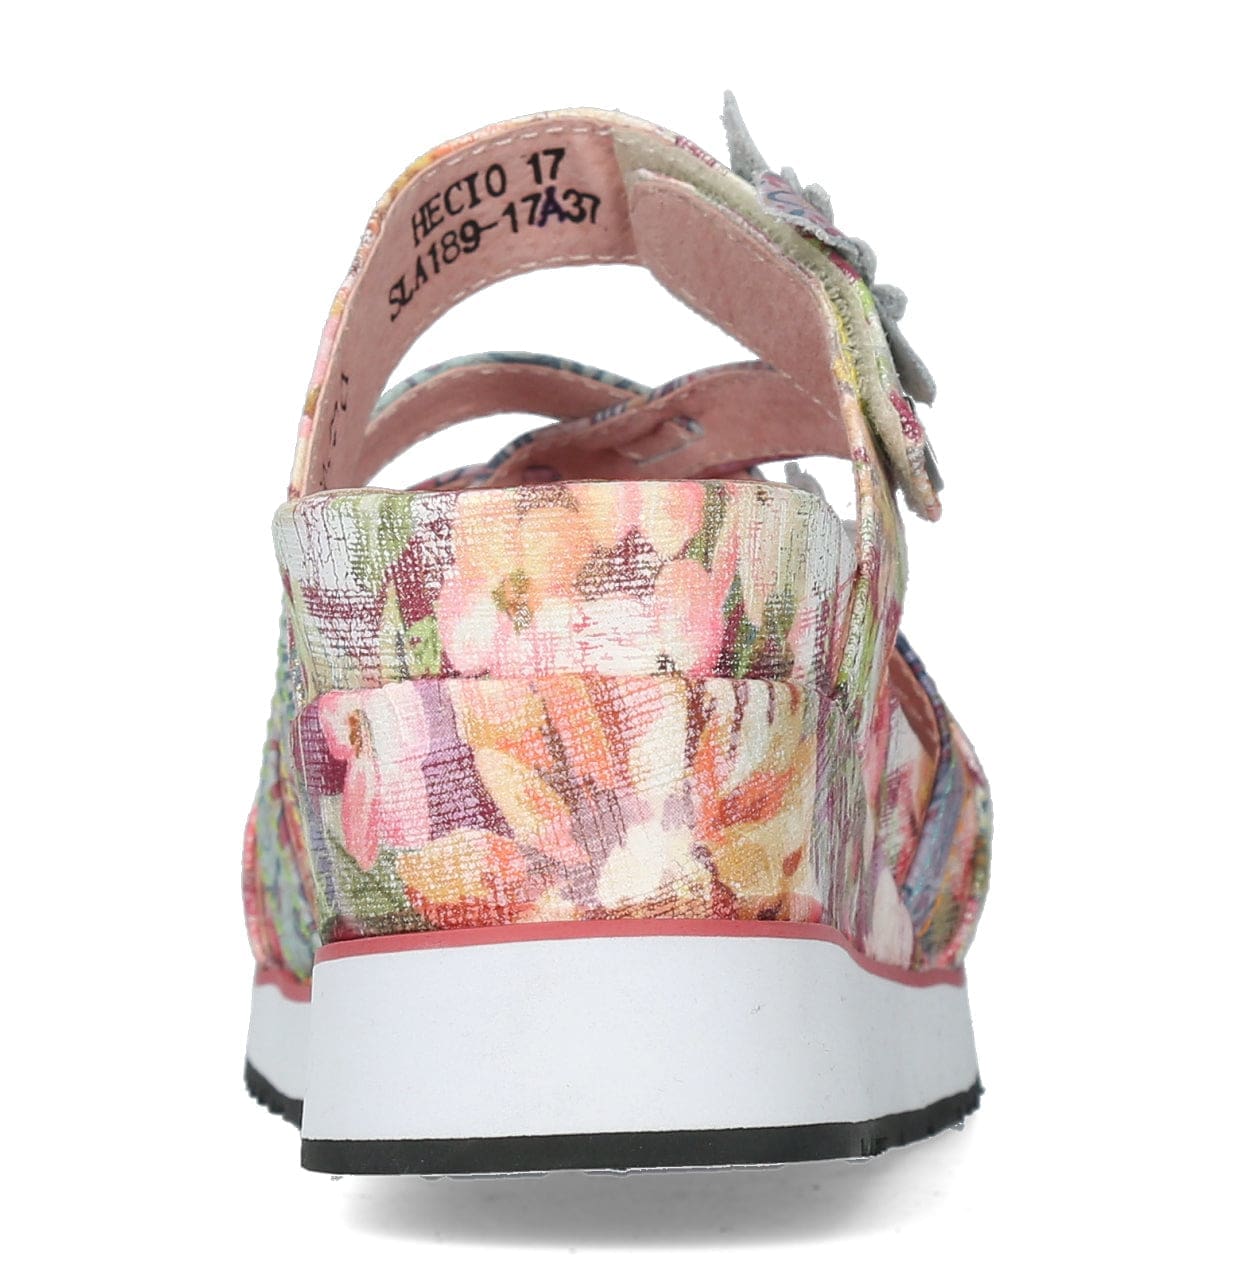 HECIO 17 blomst - Sandal